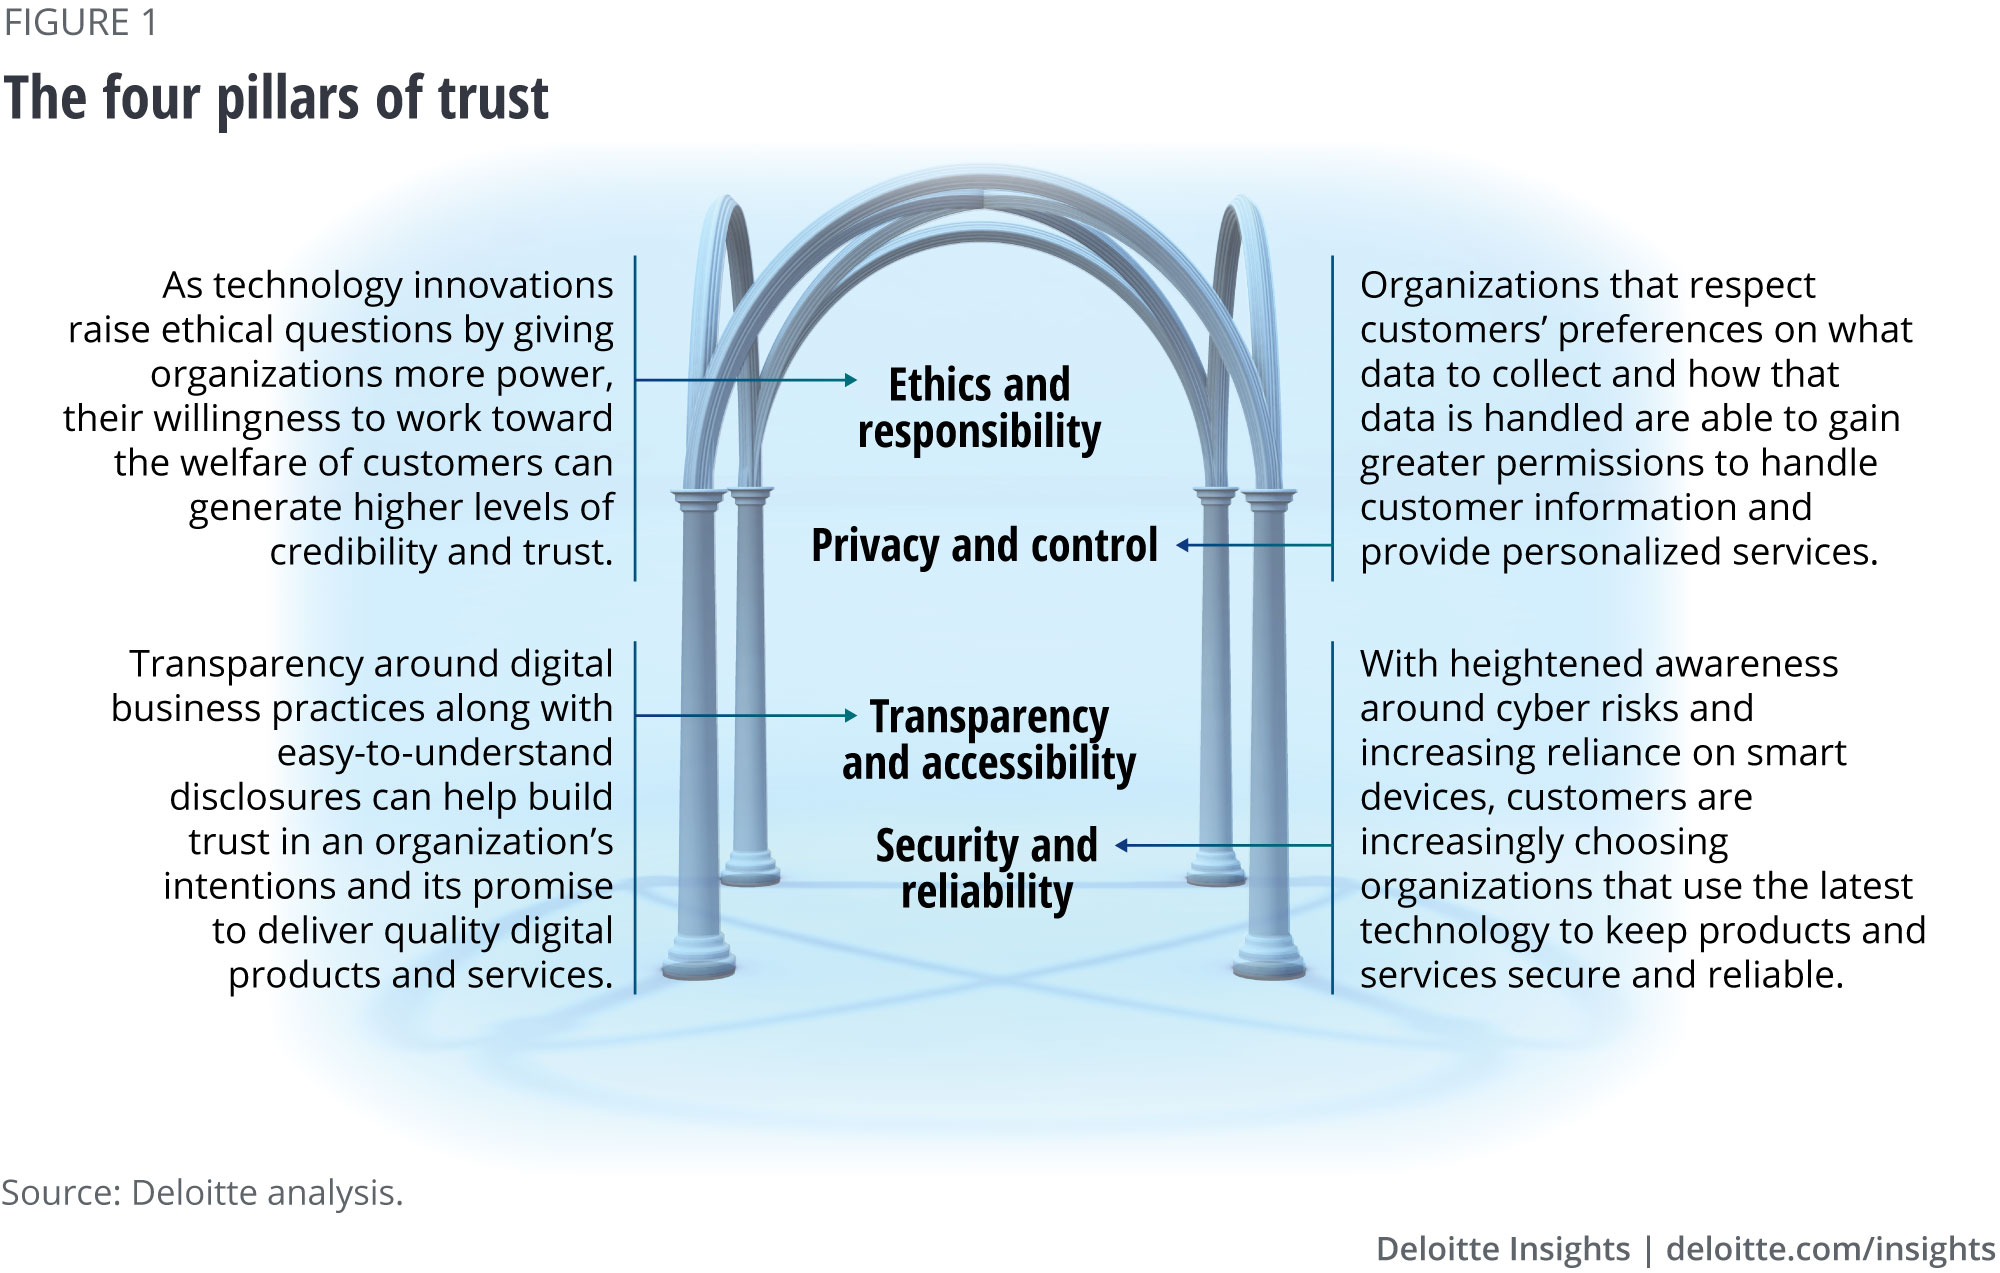 The four pillars of trust